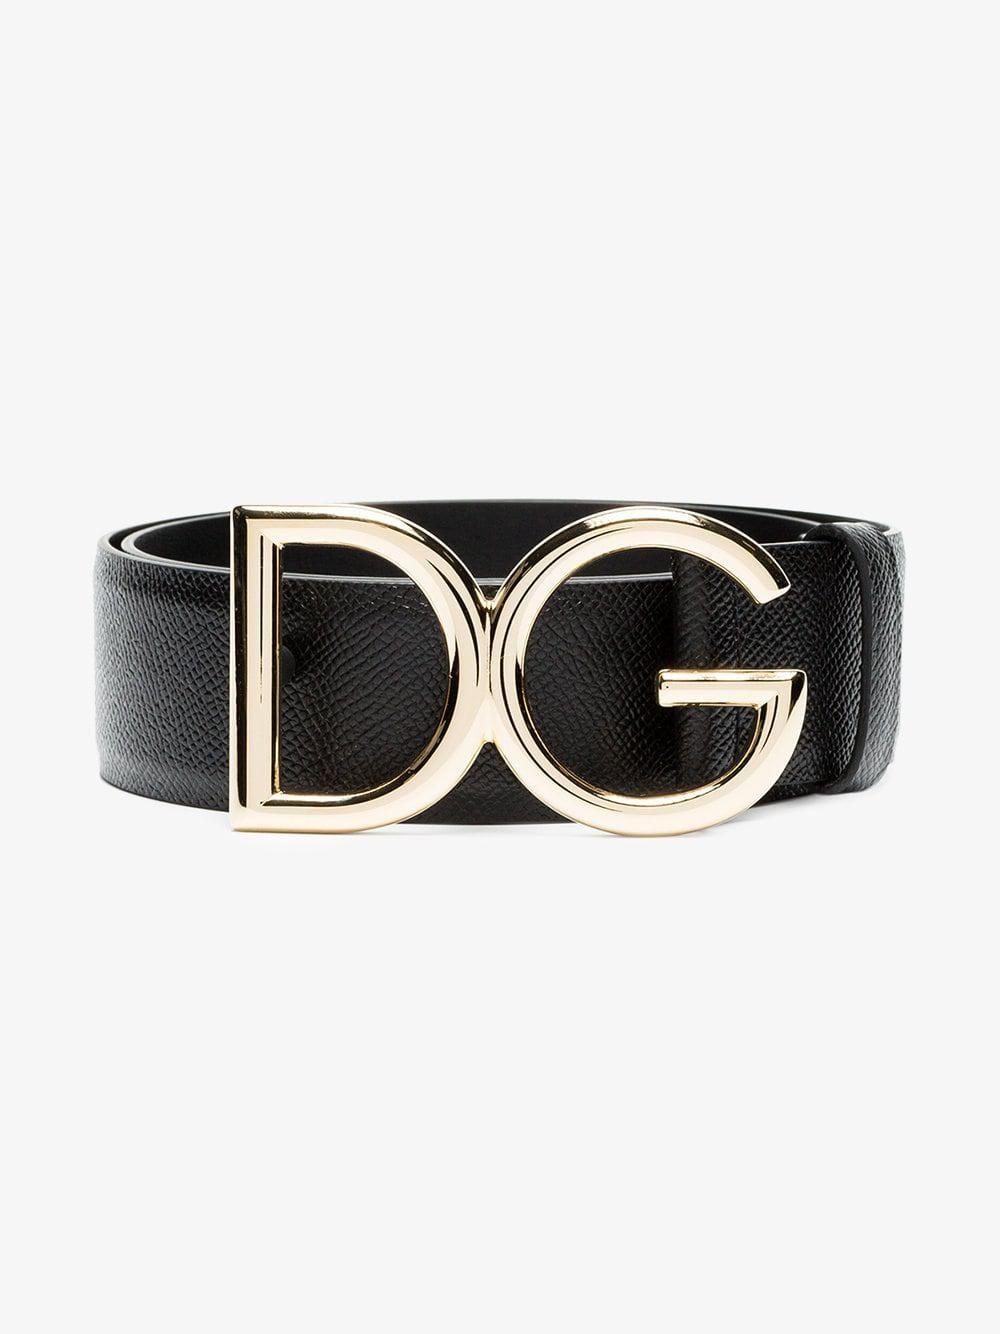 DG Fashion Logo - Dolce & Gabbana Dg Logo Pebbled Leather Belt in Black - Lyst